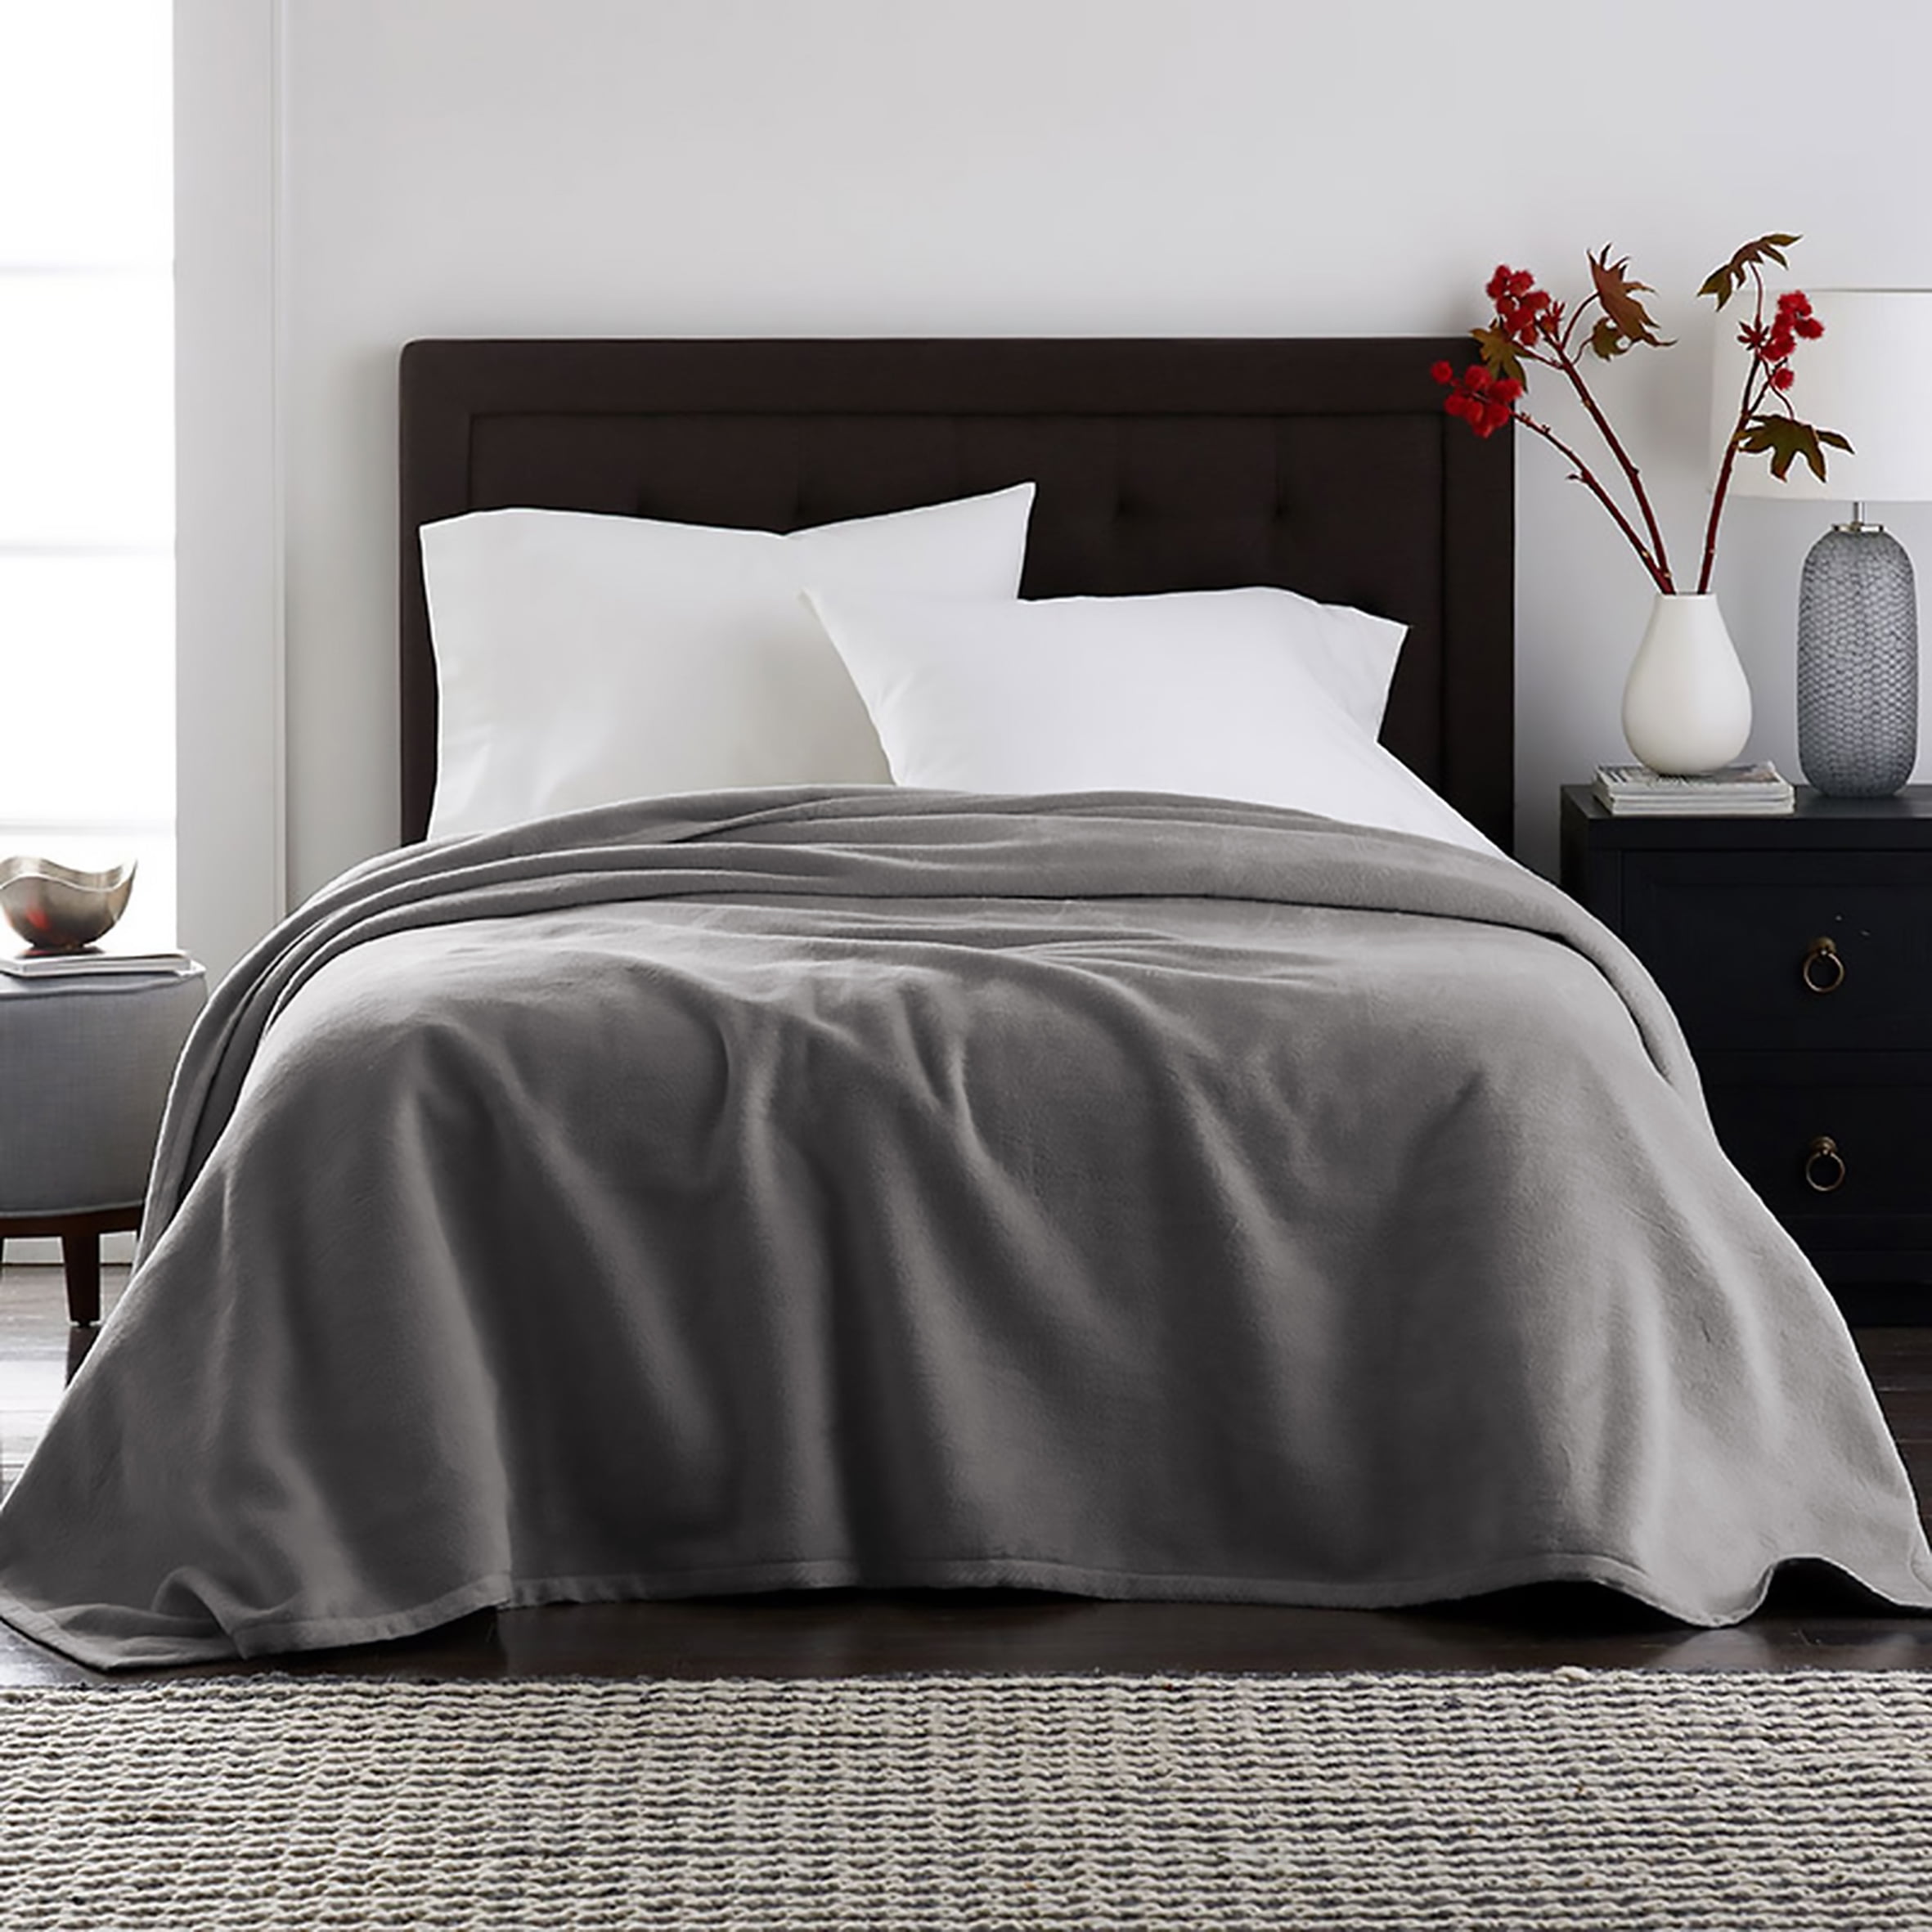 Home Fashion Designs Ultra Velvet Plush Fleece All-Season Super Soft Luxury Bed Blanket Lightweight and Warm for Ultimate Comfort Brand. Full/Queen, Steel Grey